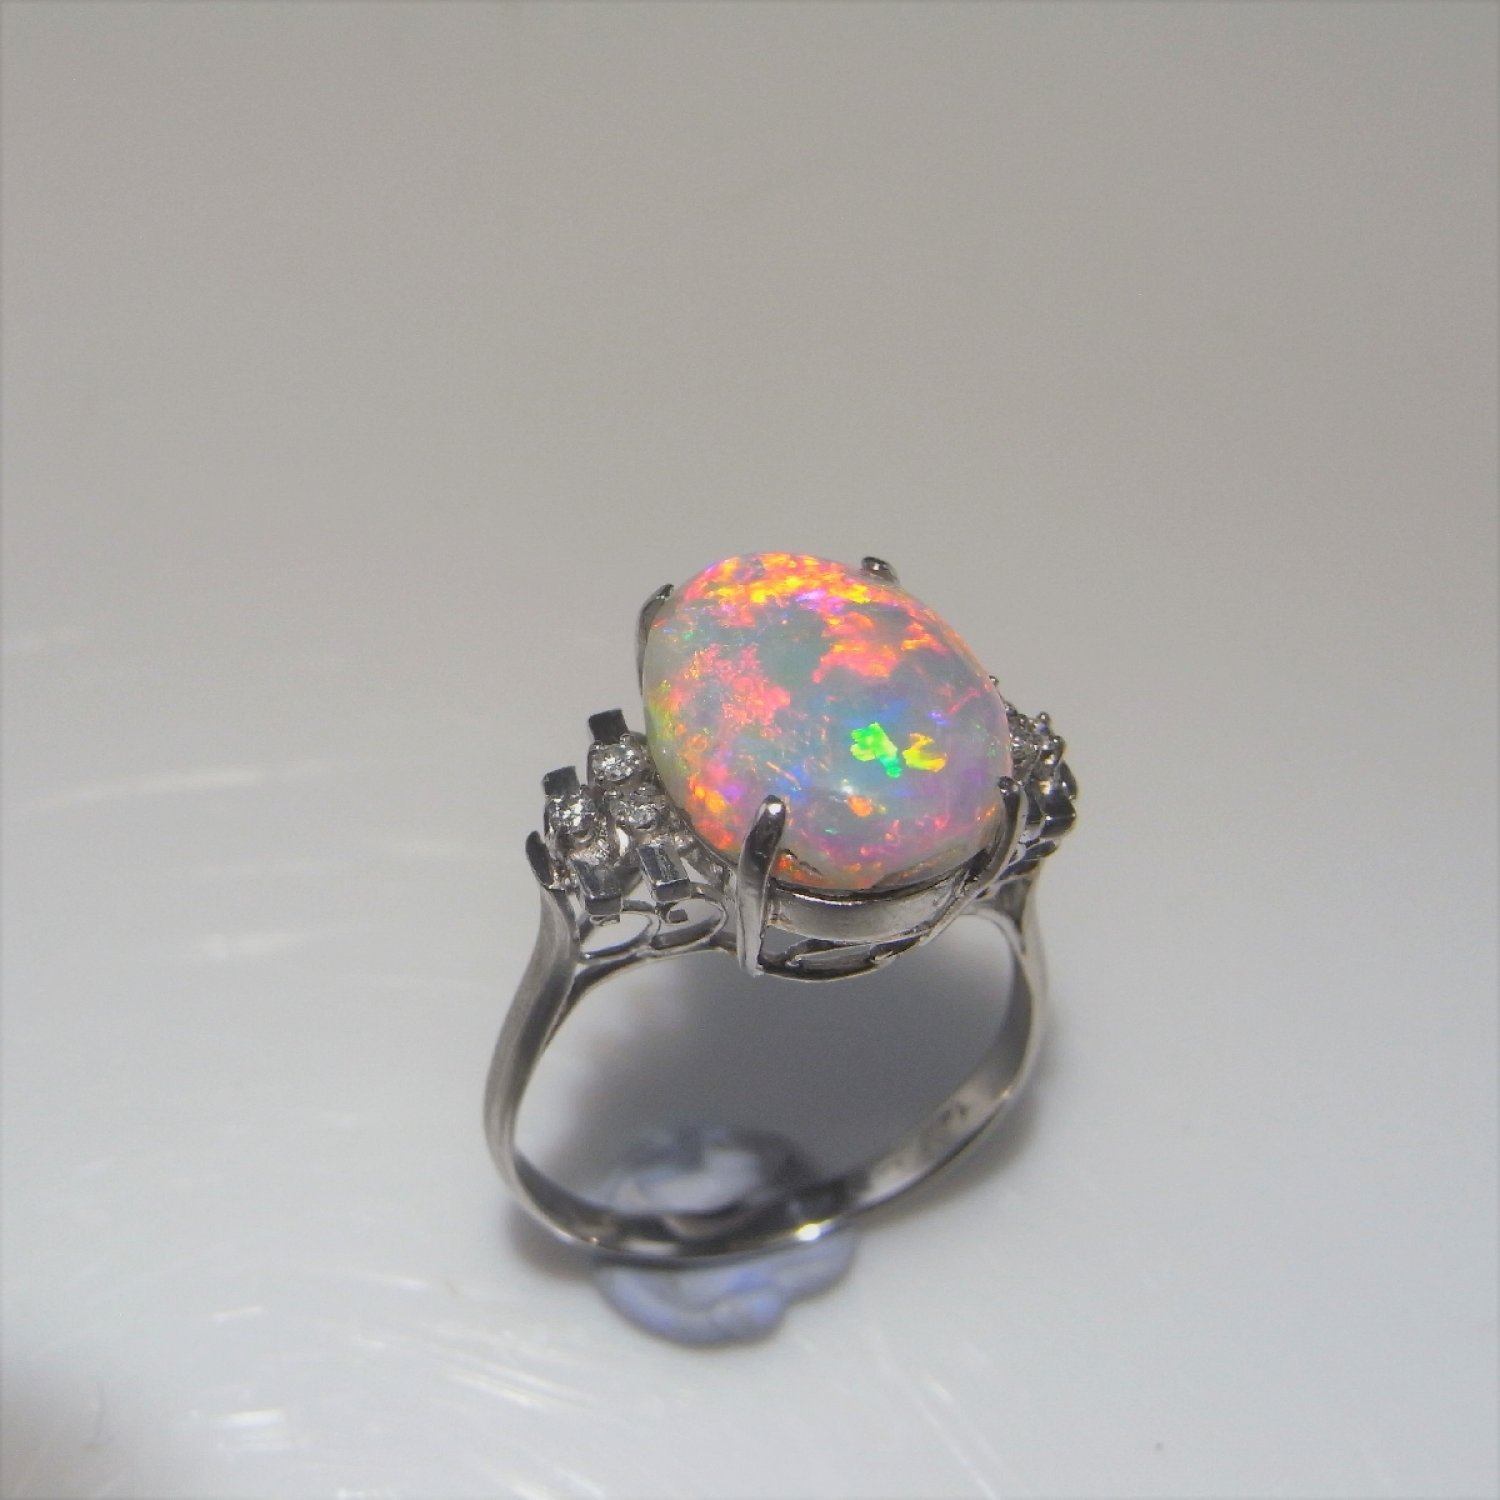 A Large Handmade Natural Australian Opal Diamond Engagement Ring in Platinum